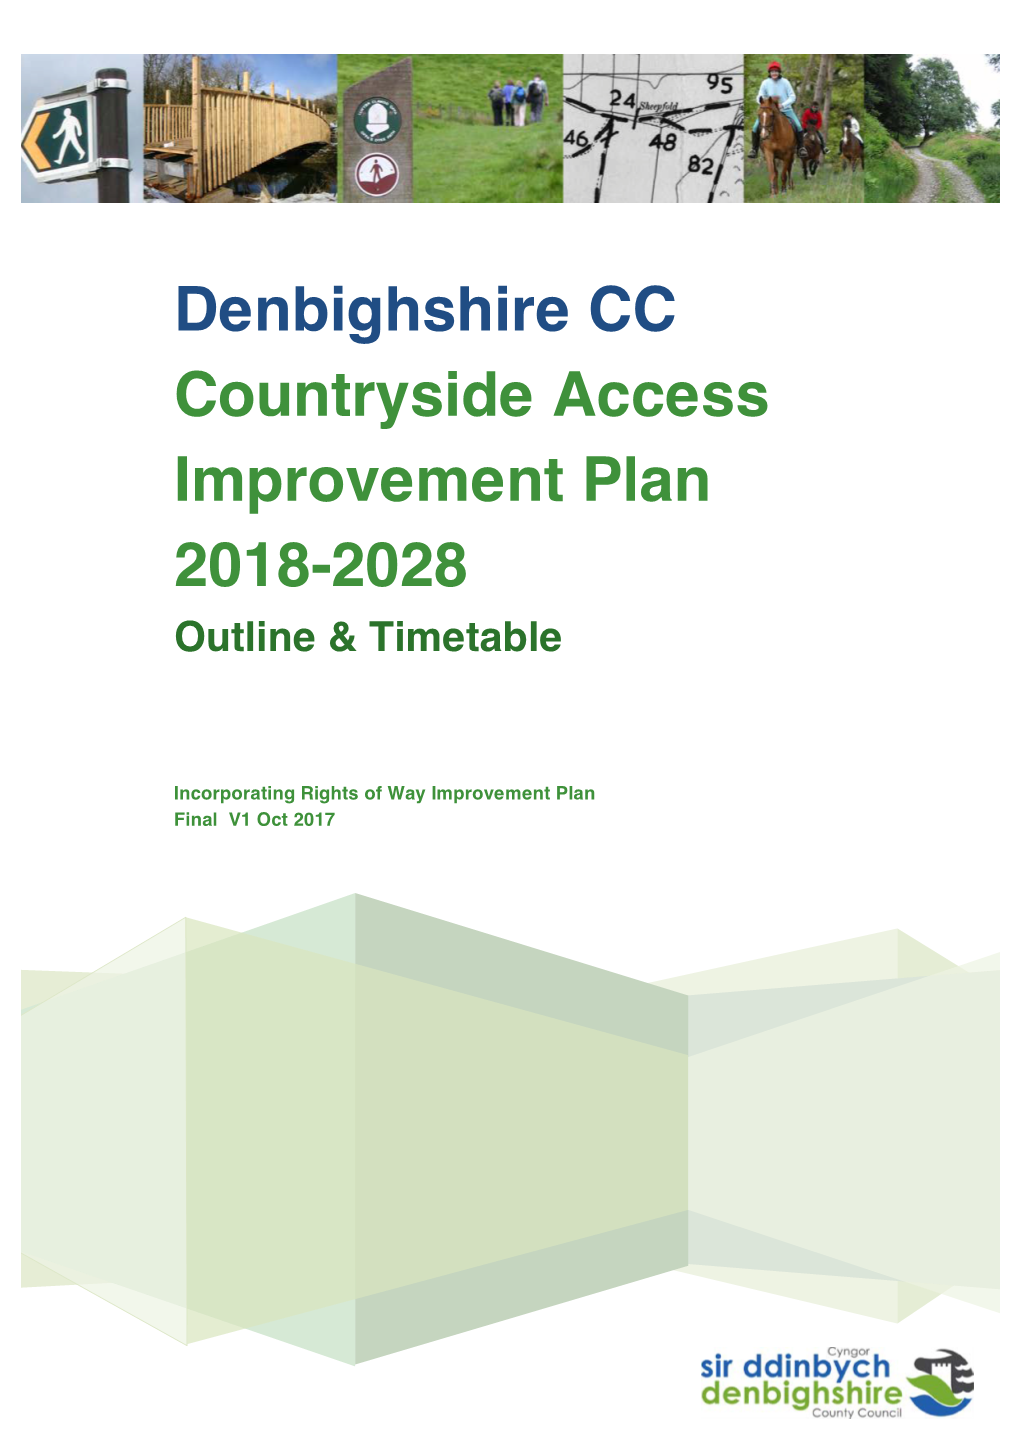 Denbighshire CC Countryside Access Improvement Plan 2018-2028 Outline & Timetable